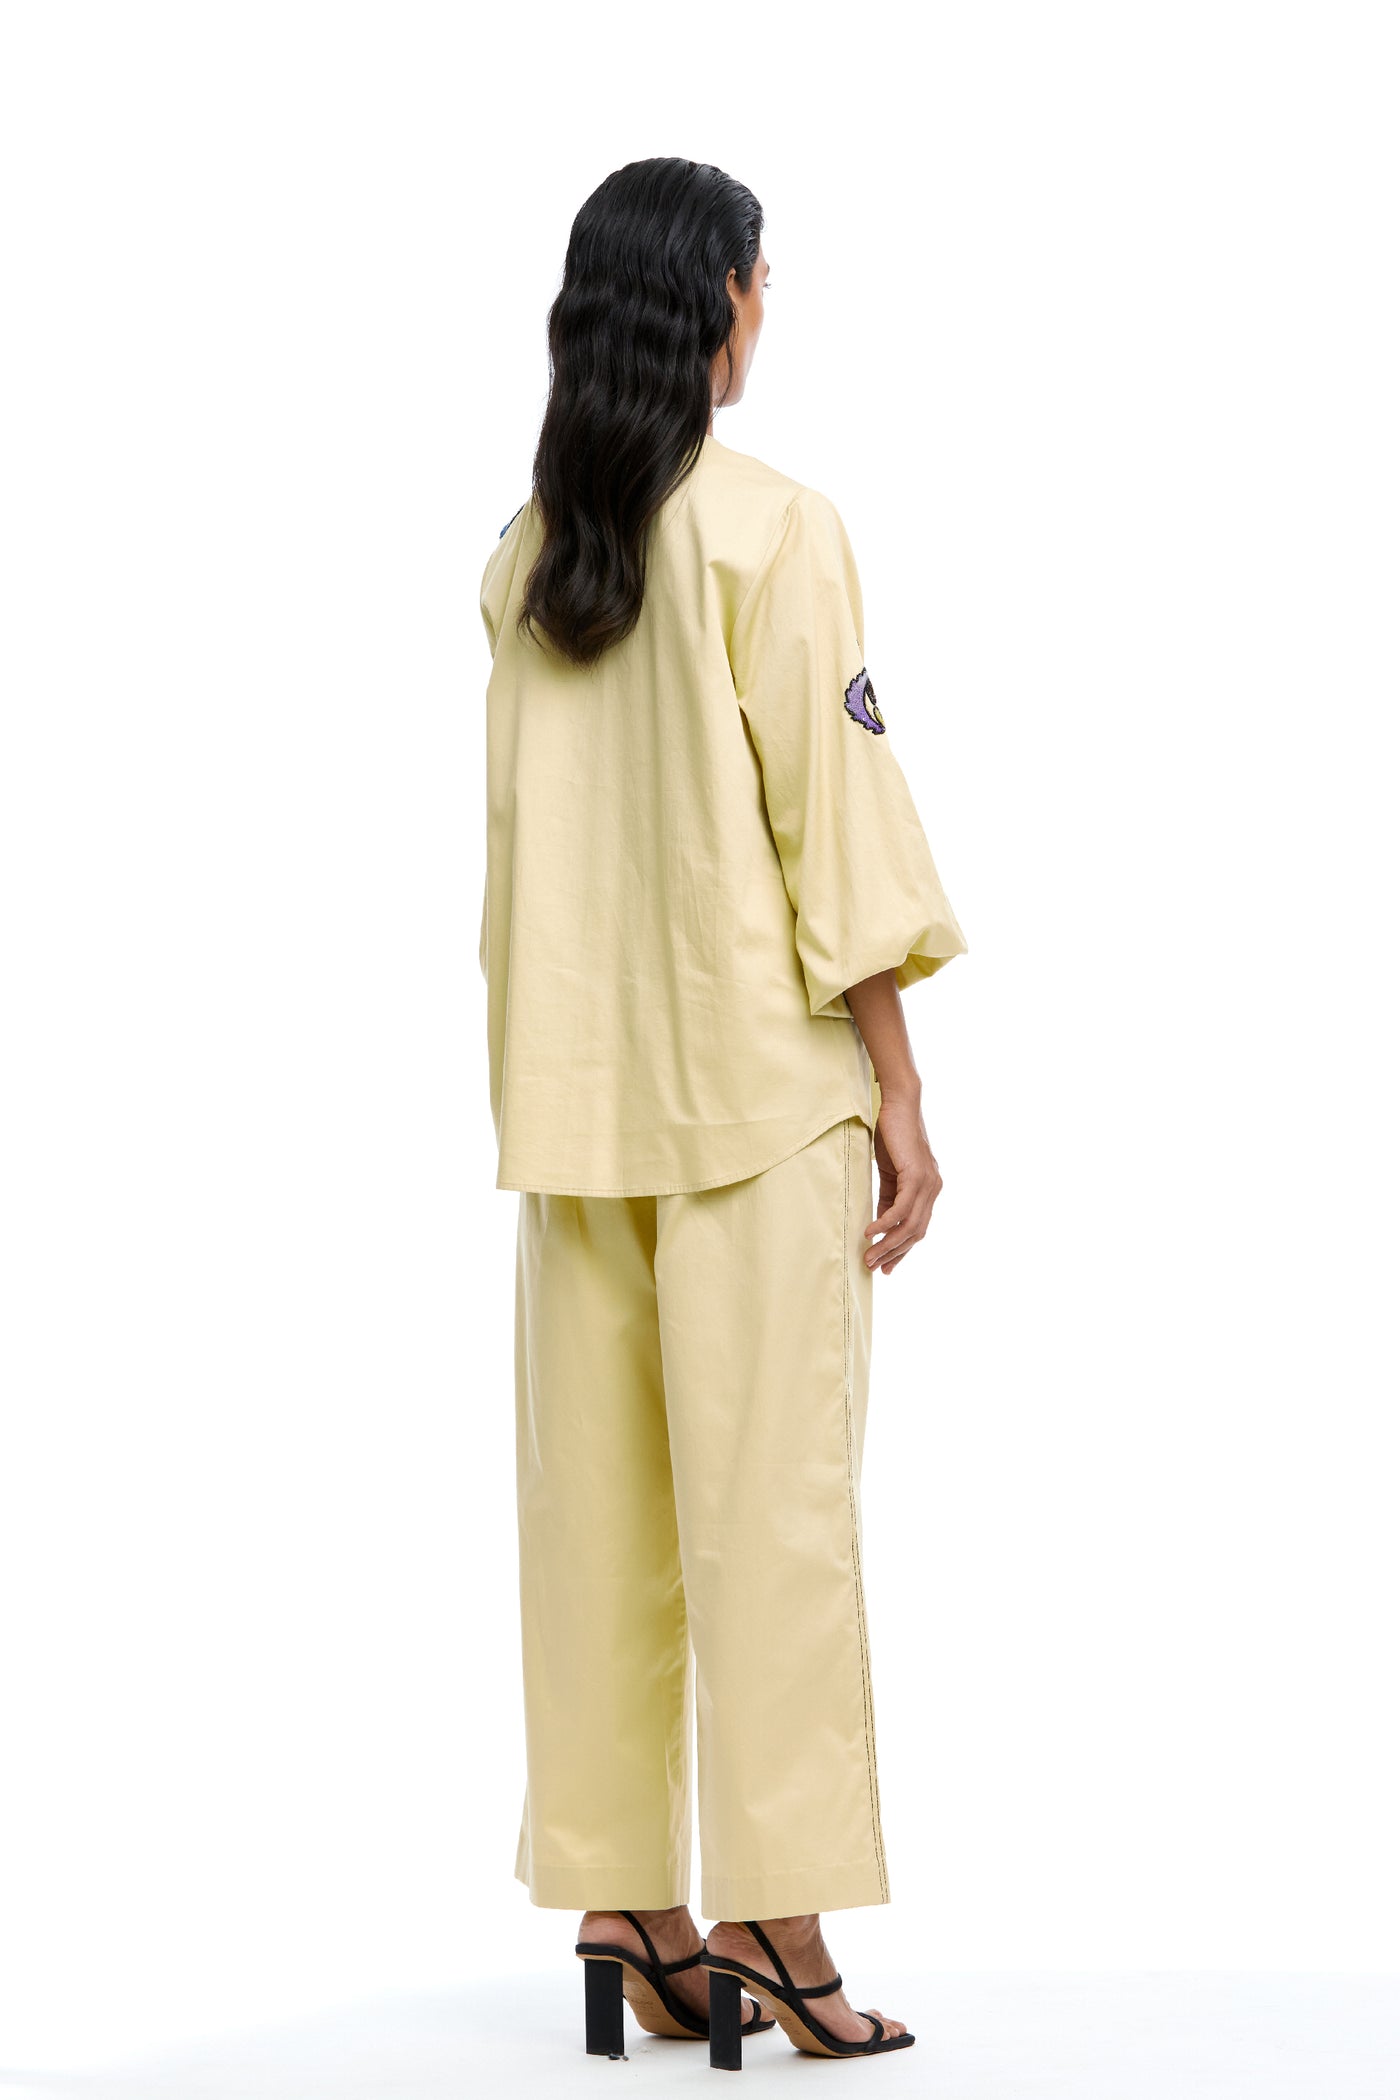 Kanika Goyal Label Nova Hand Embellished Wrap Shirt indian designer wear online shopping melange singapore